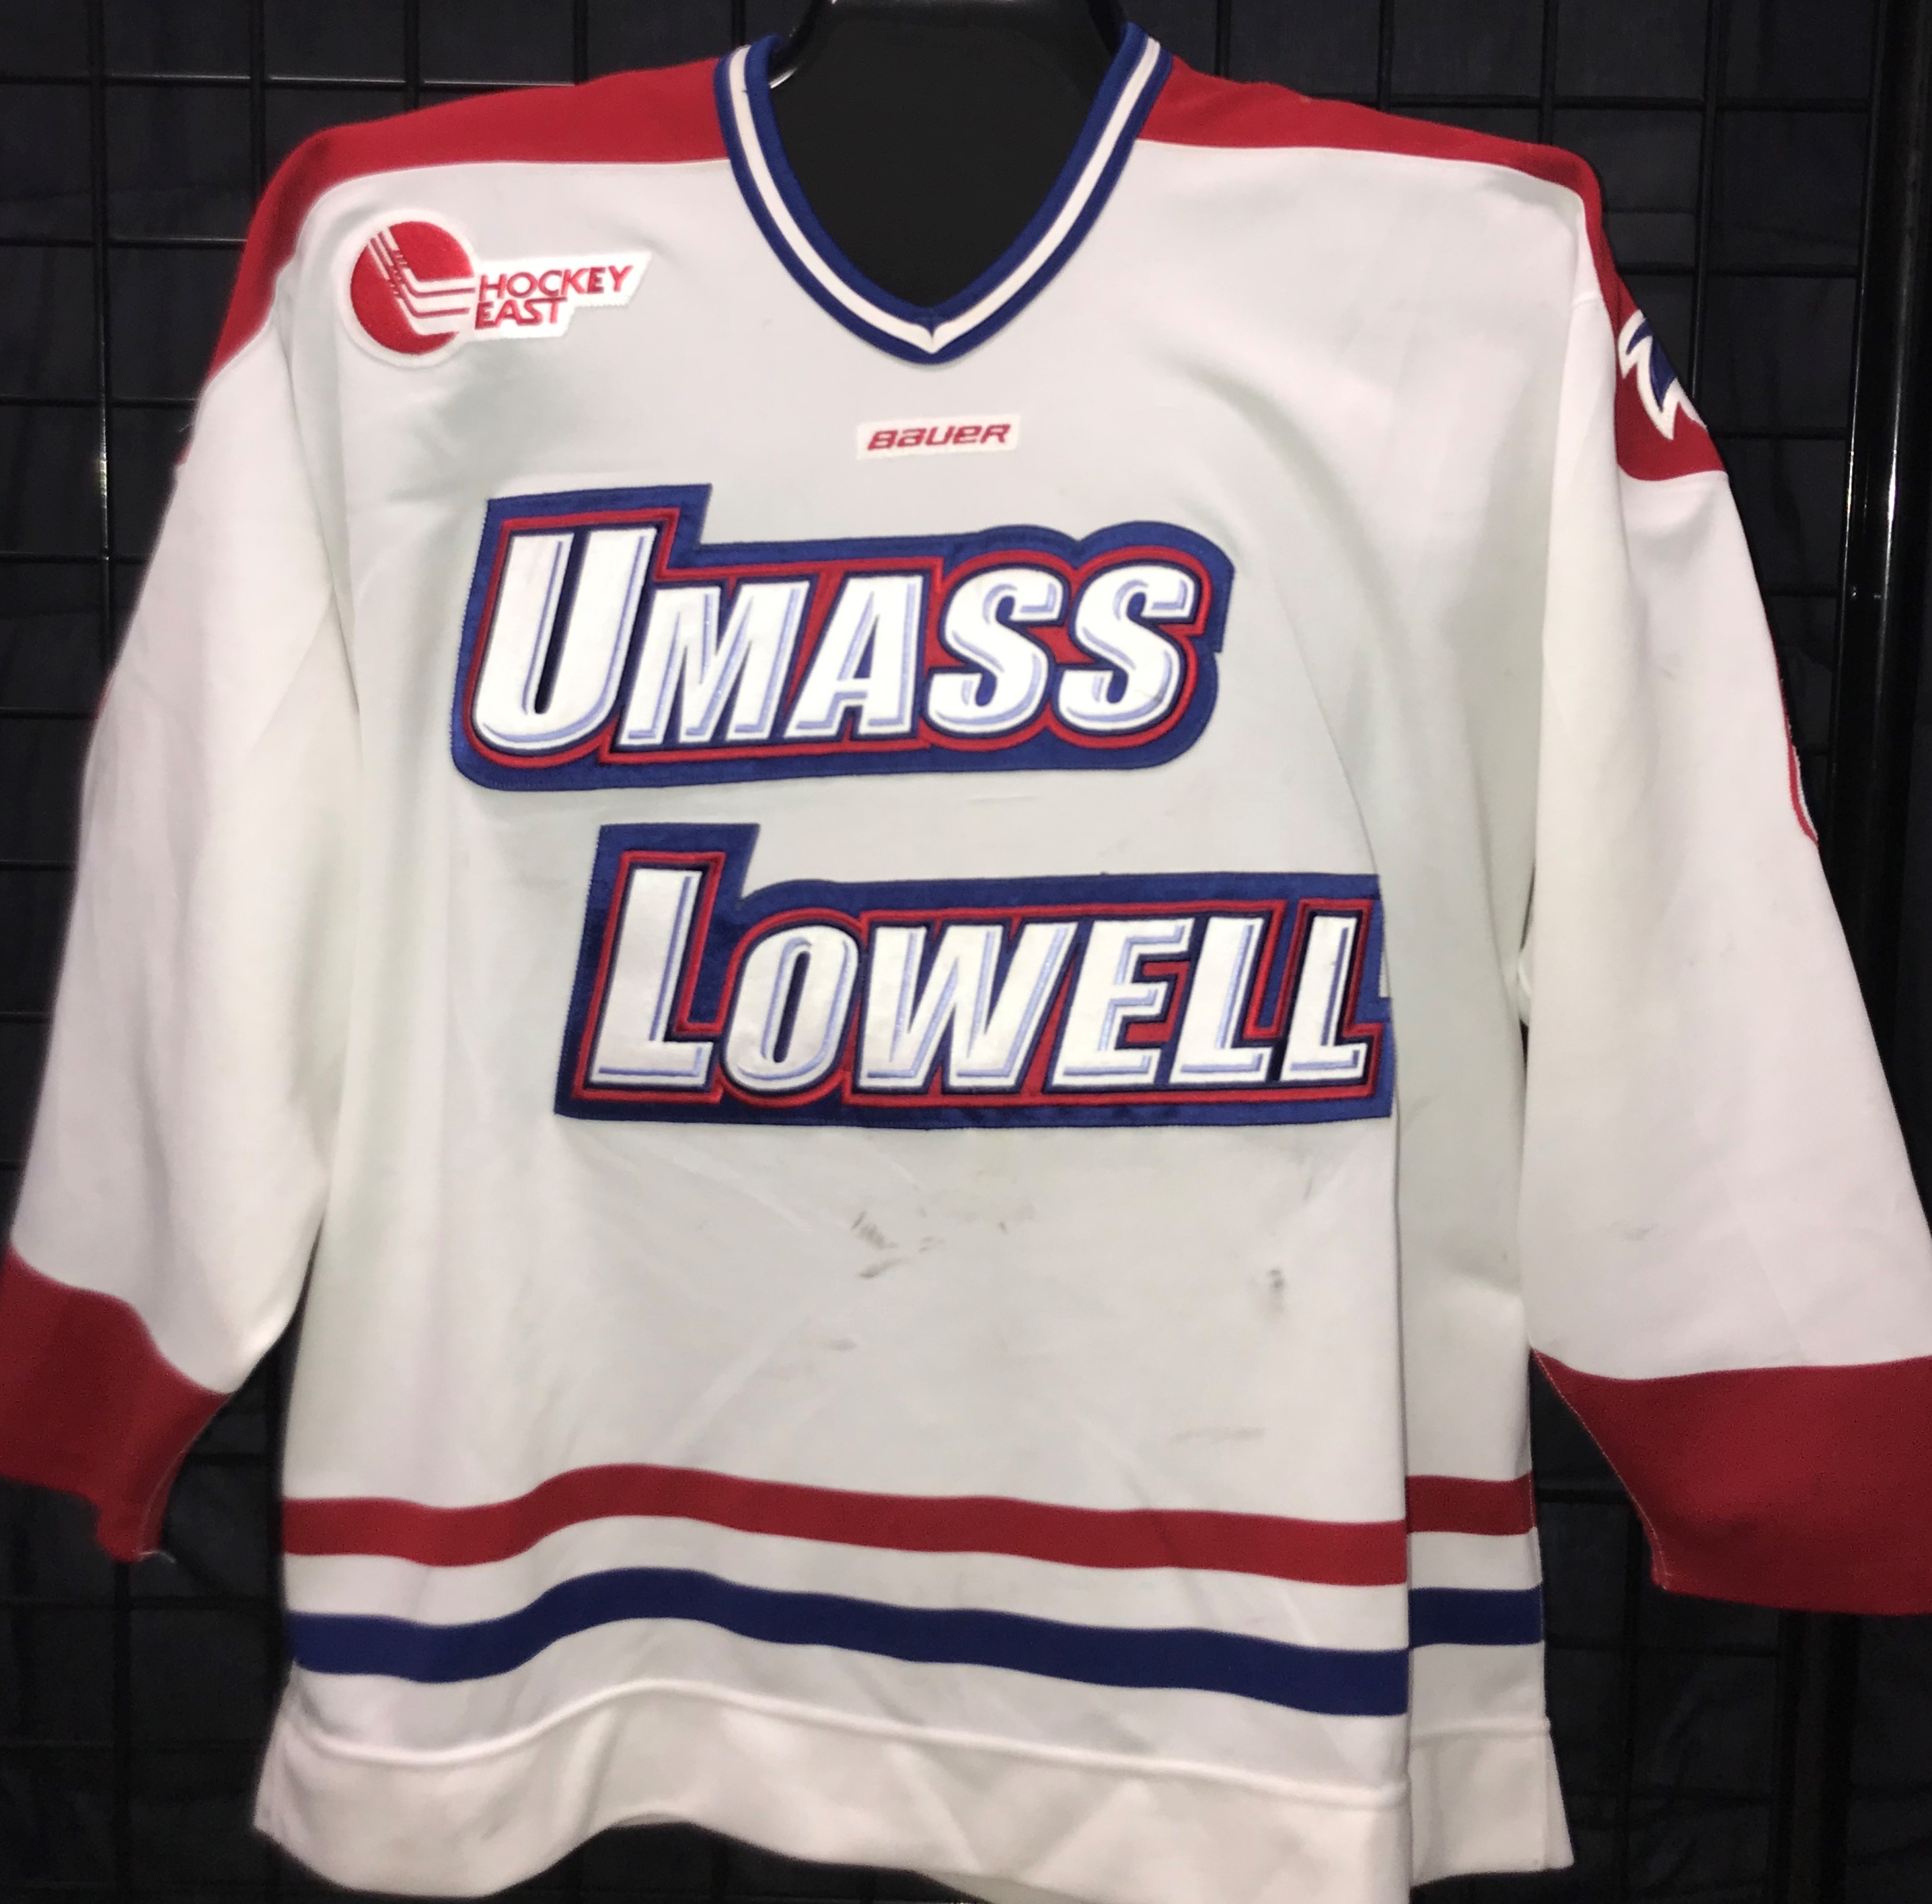 umass hockey jersey for sale